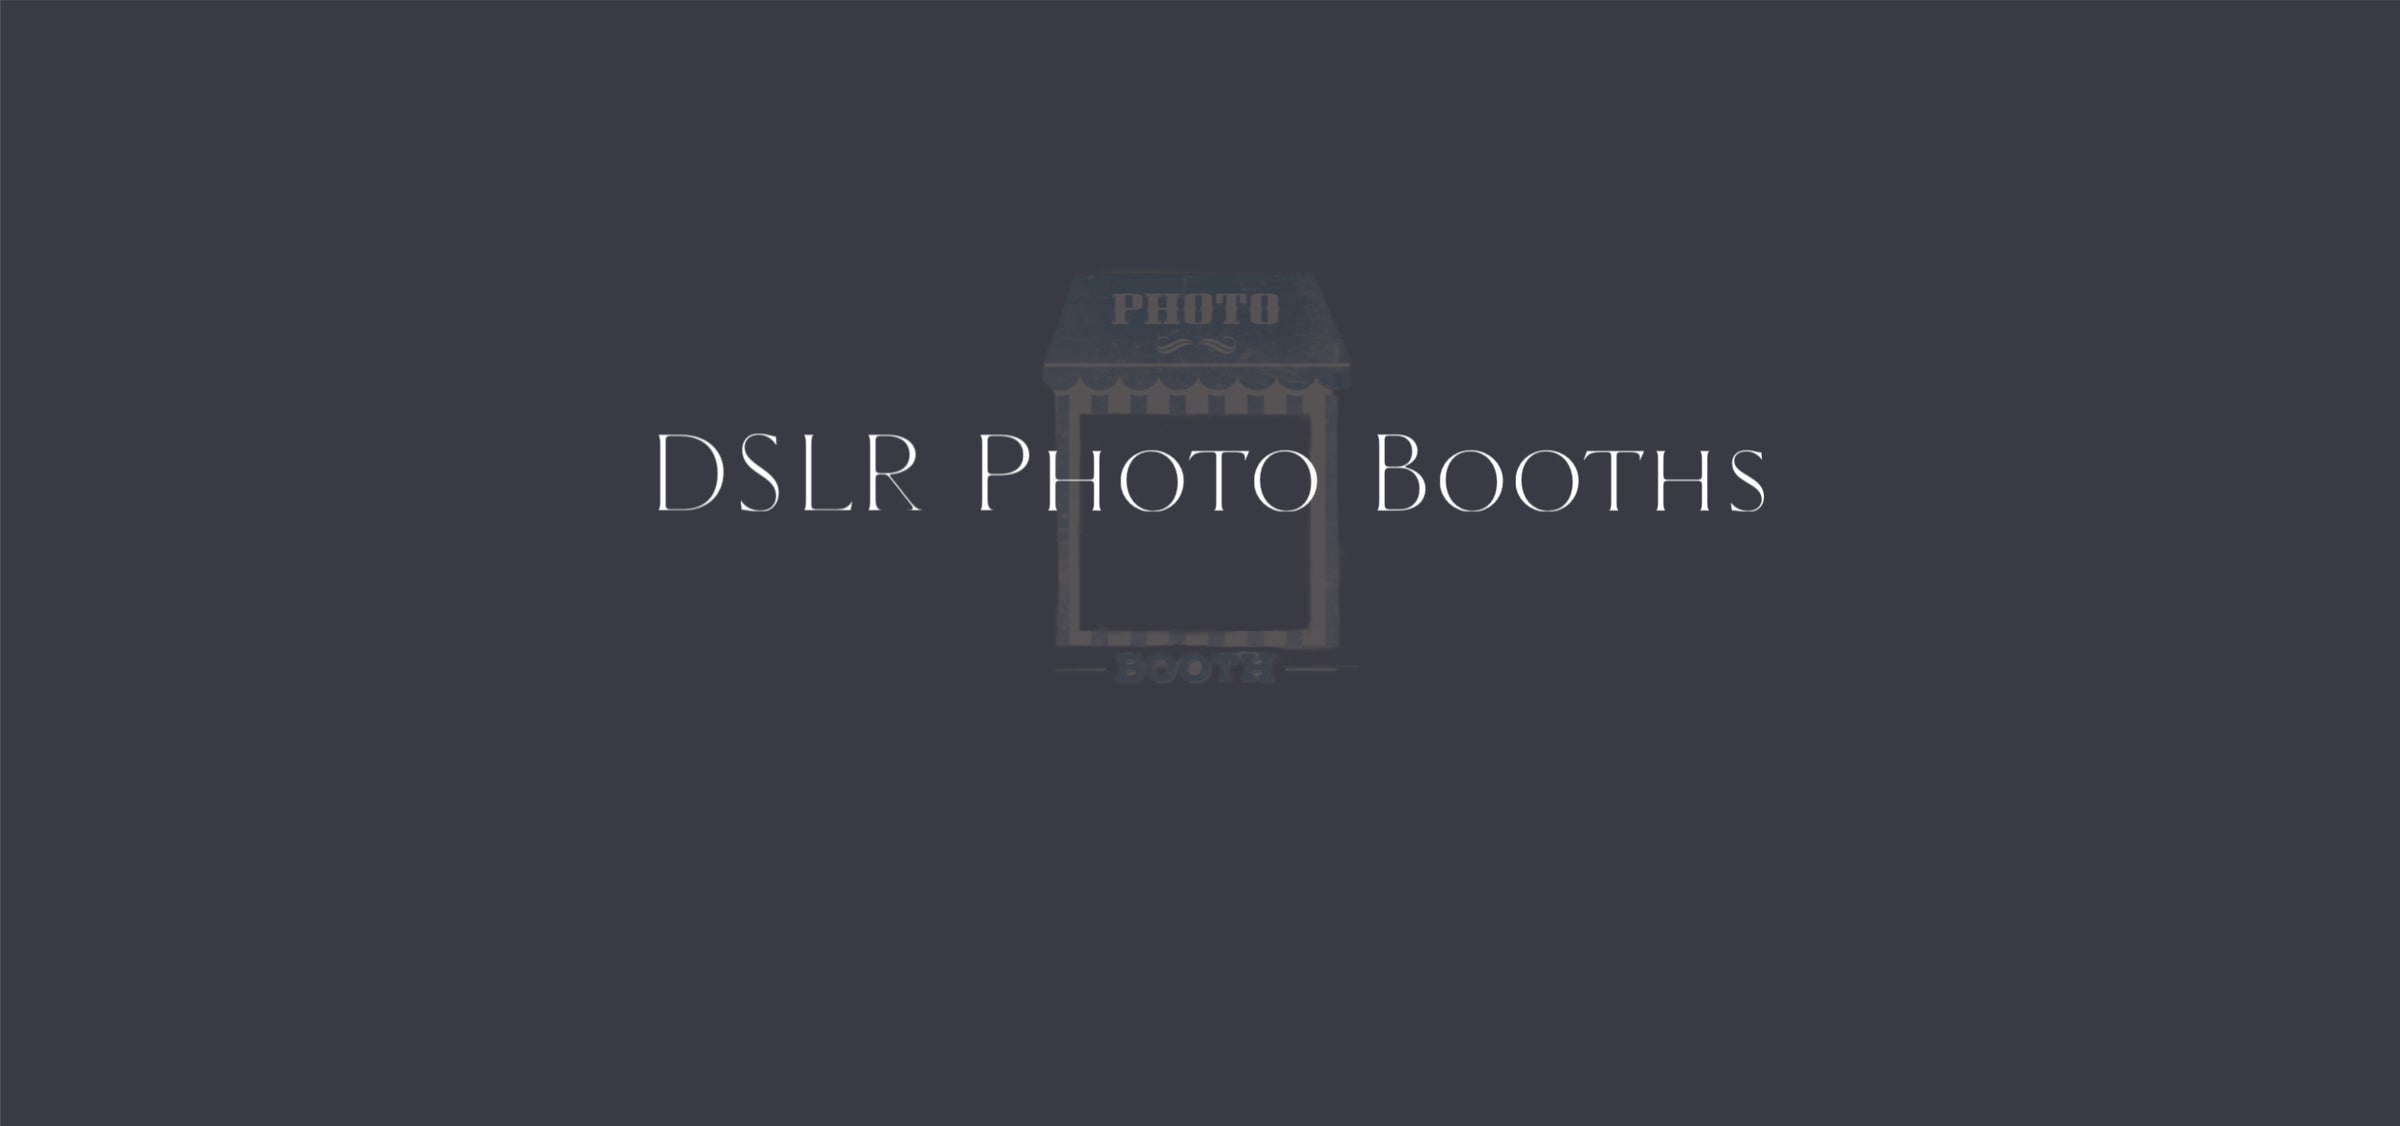 DSLR Photo Booths